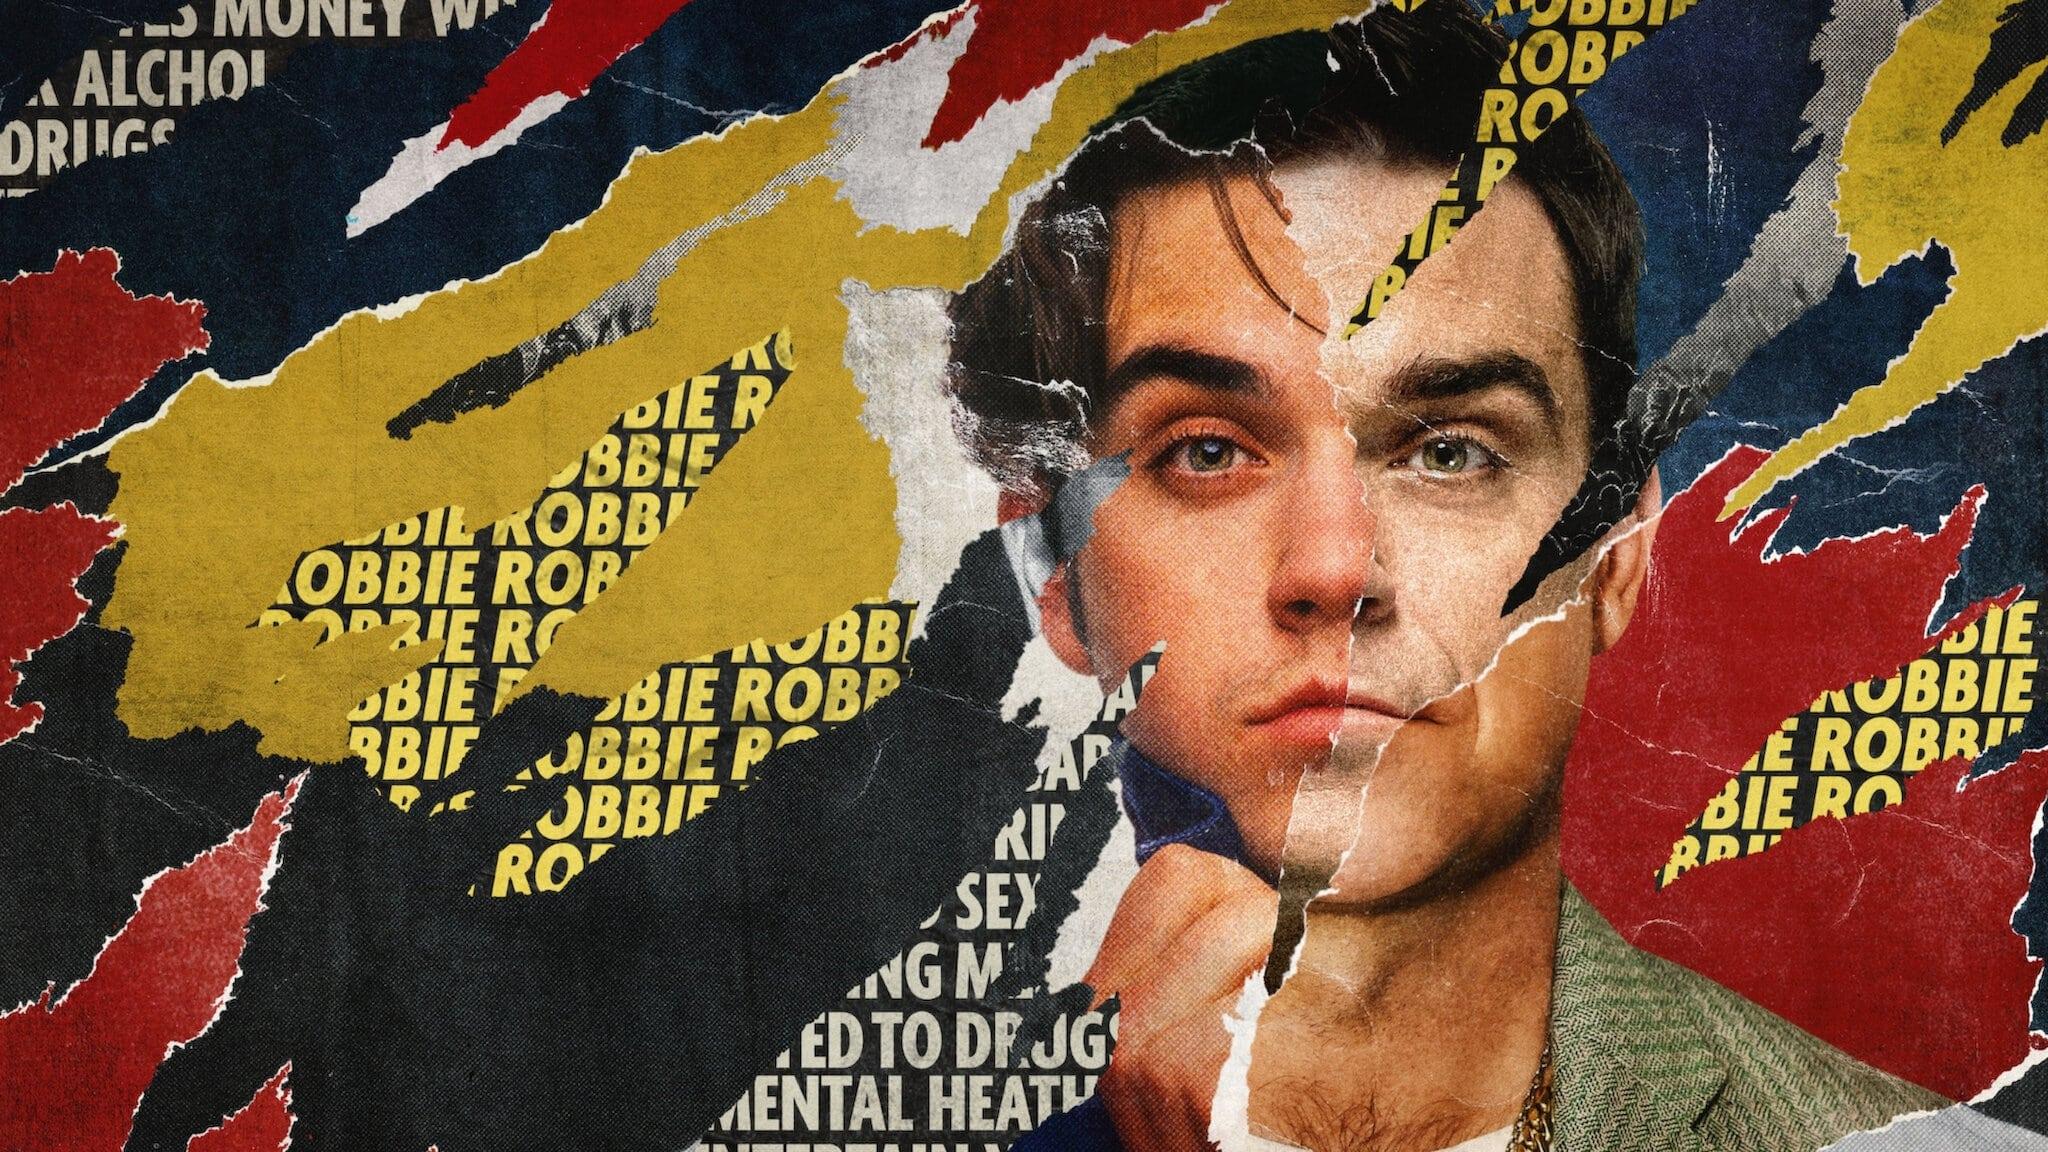 Robbie Williams backdrop